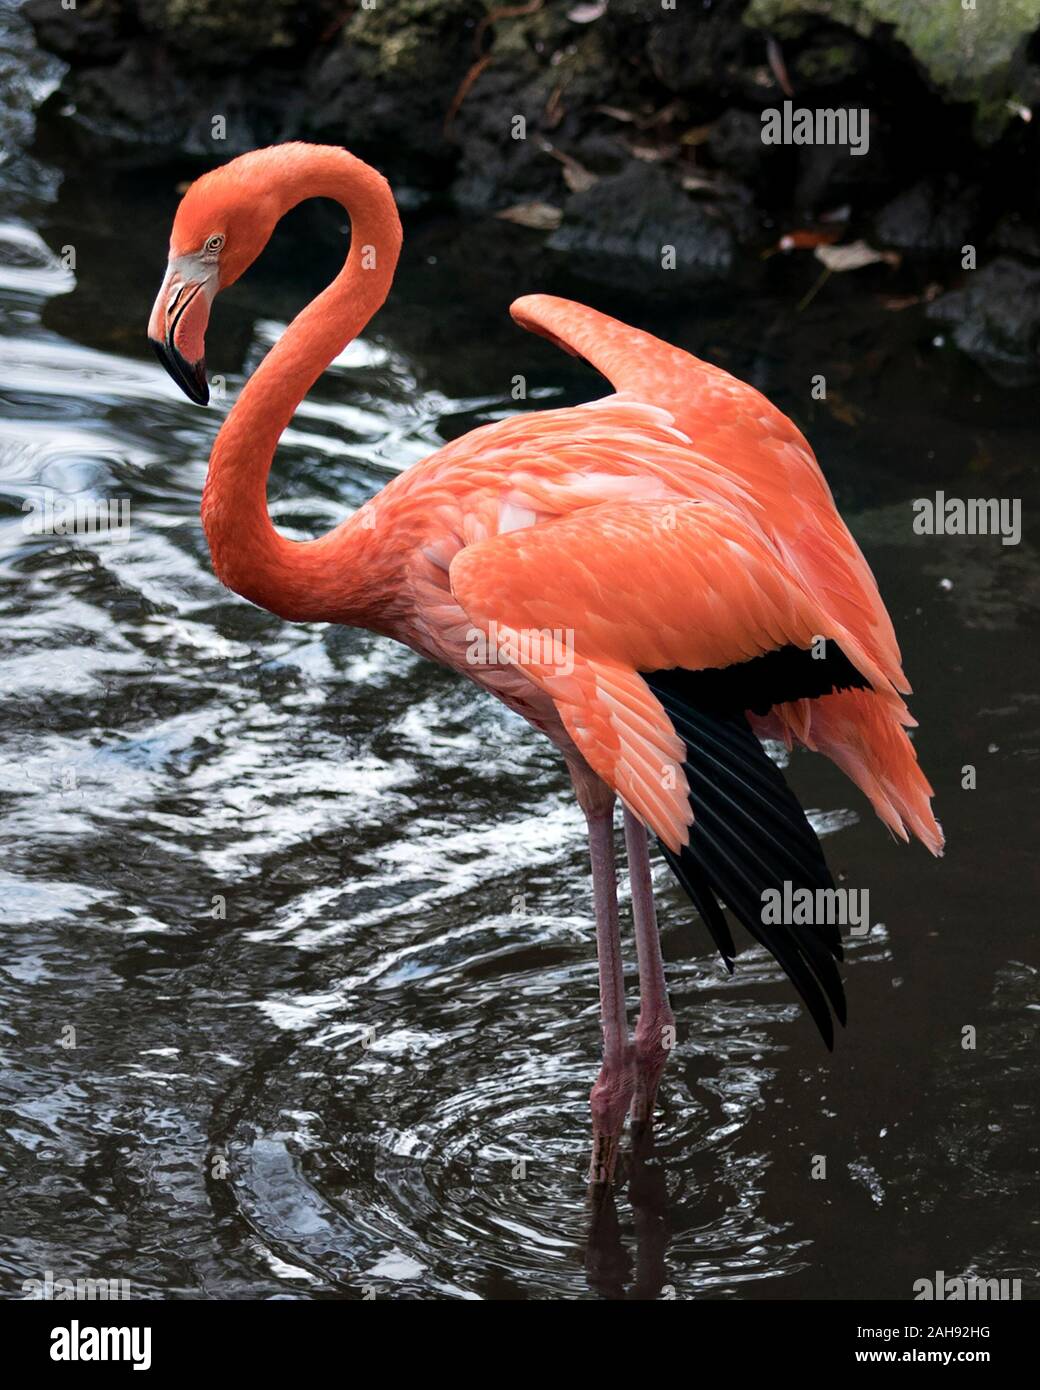 Flamingo bird close-up profile view in the water displaying its spread wings, beautiful orange pink plumage, head, long neck, beak, eye in its surroun Stock Photo